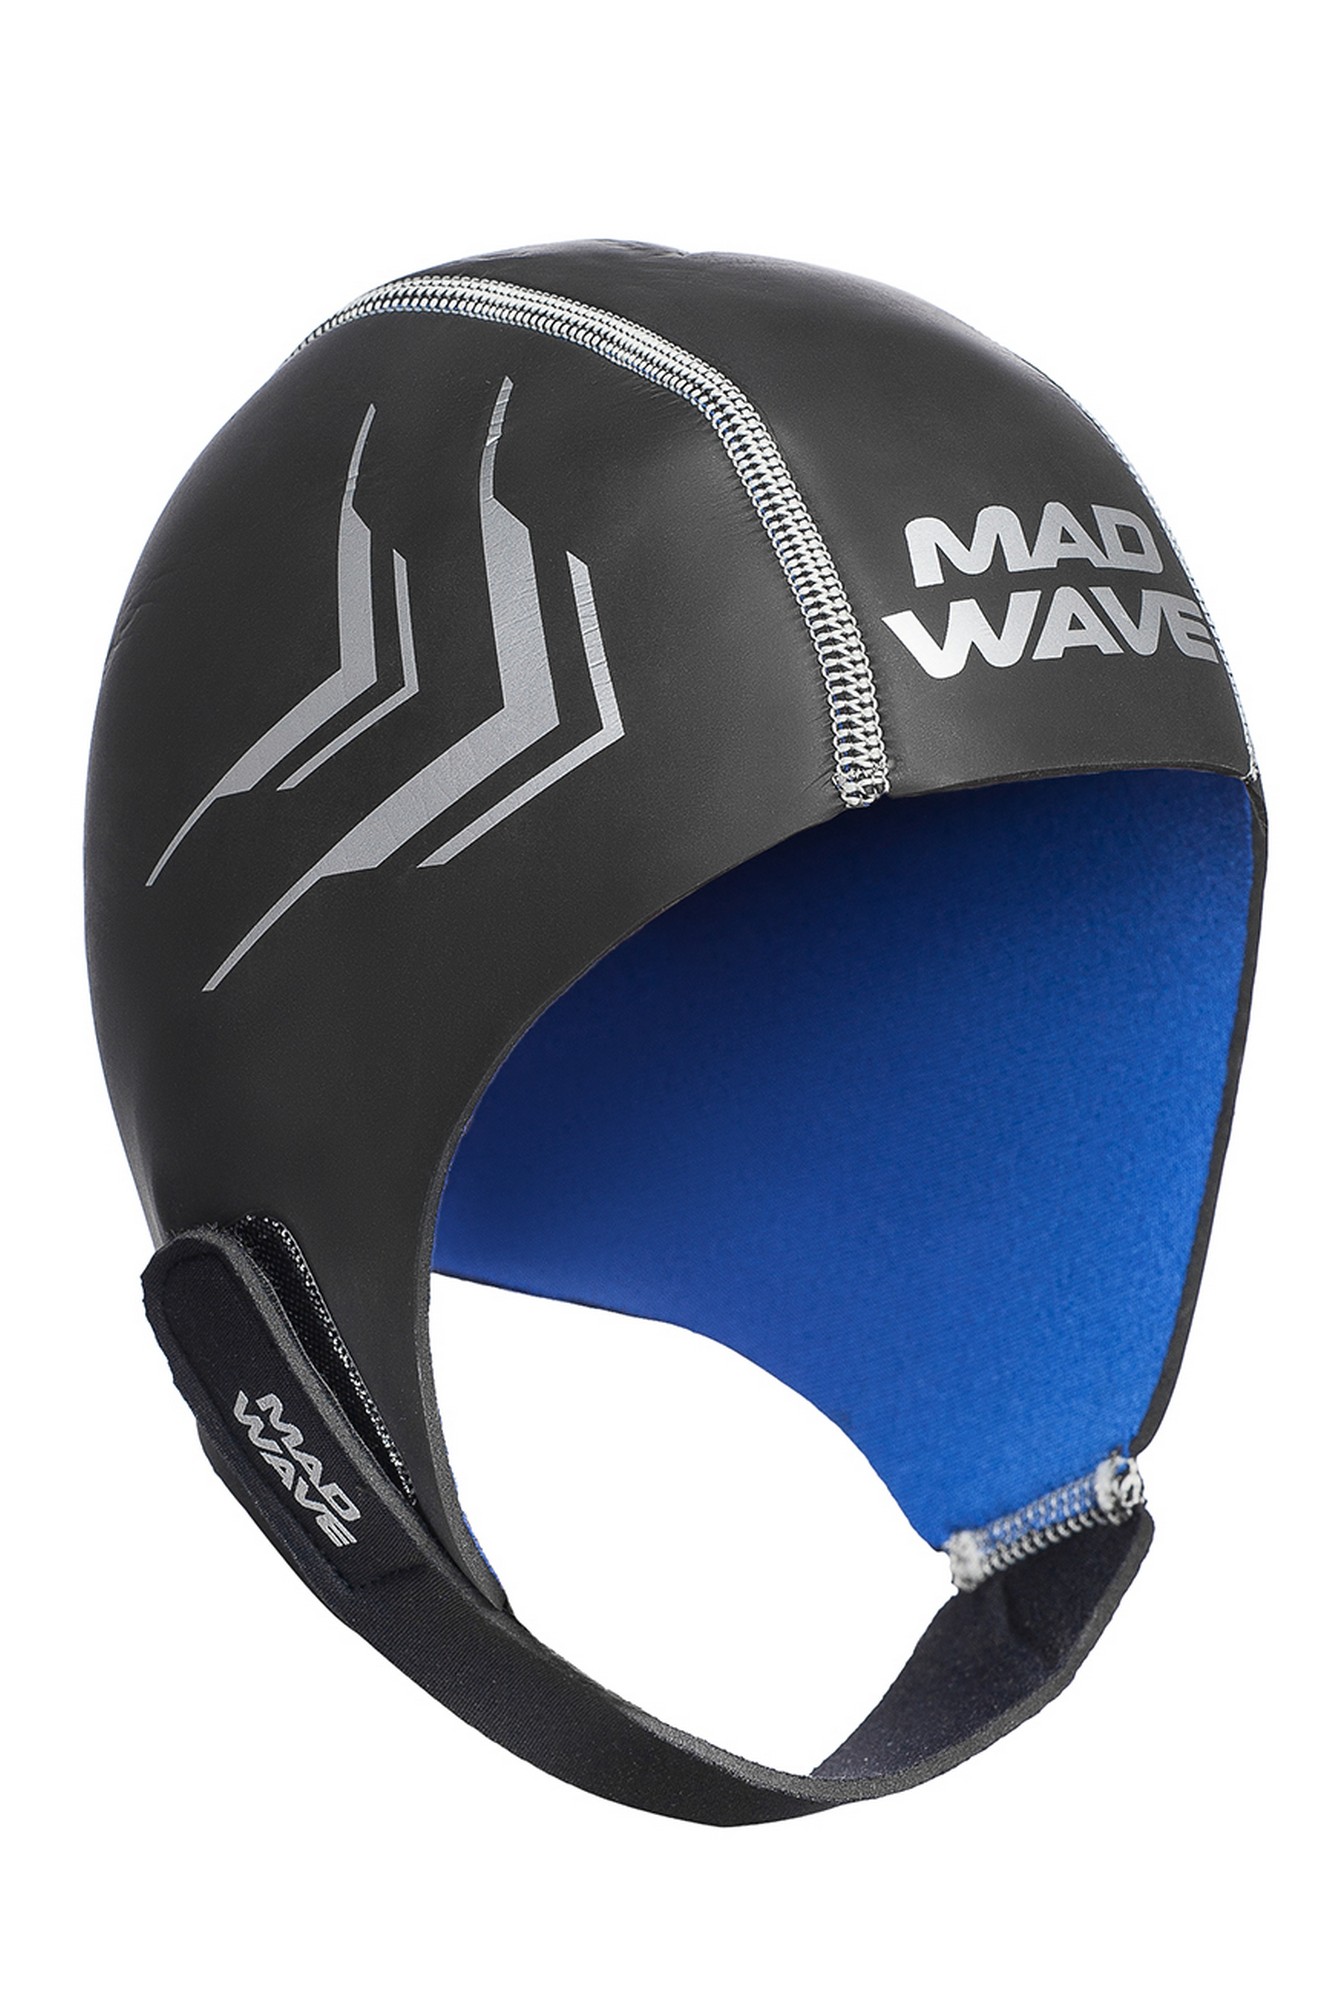   Mad Wave Helmet M2049 02 2 01W 